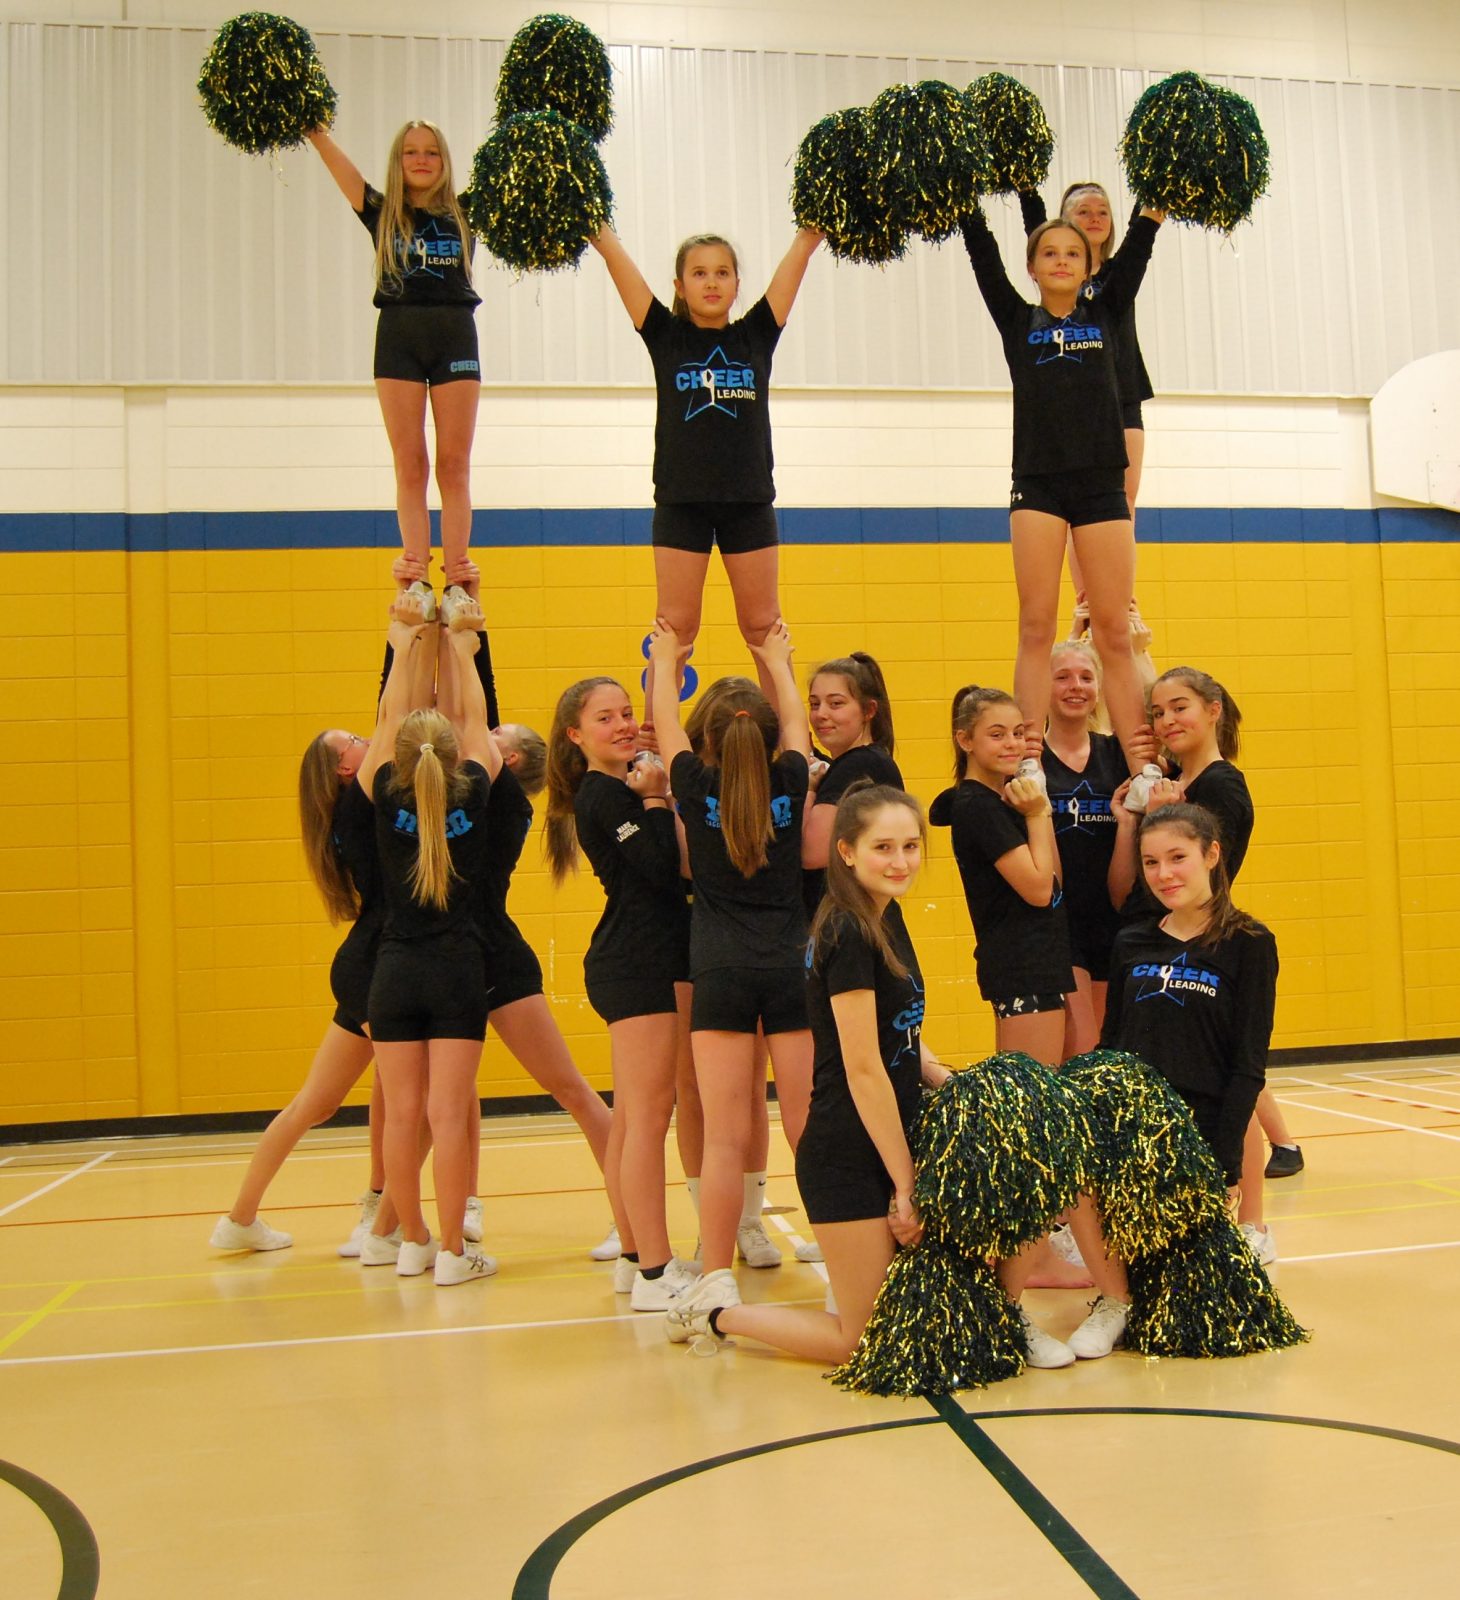 Le cheerleading un vrai sport d'équipe!